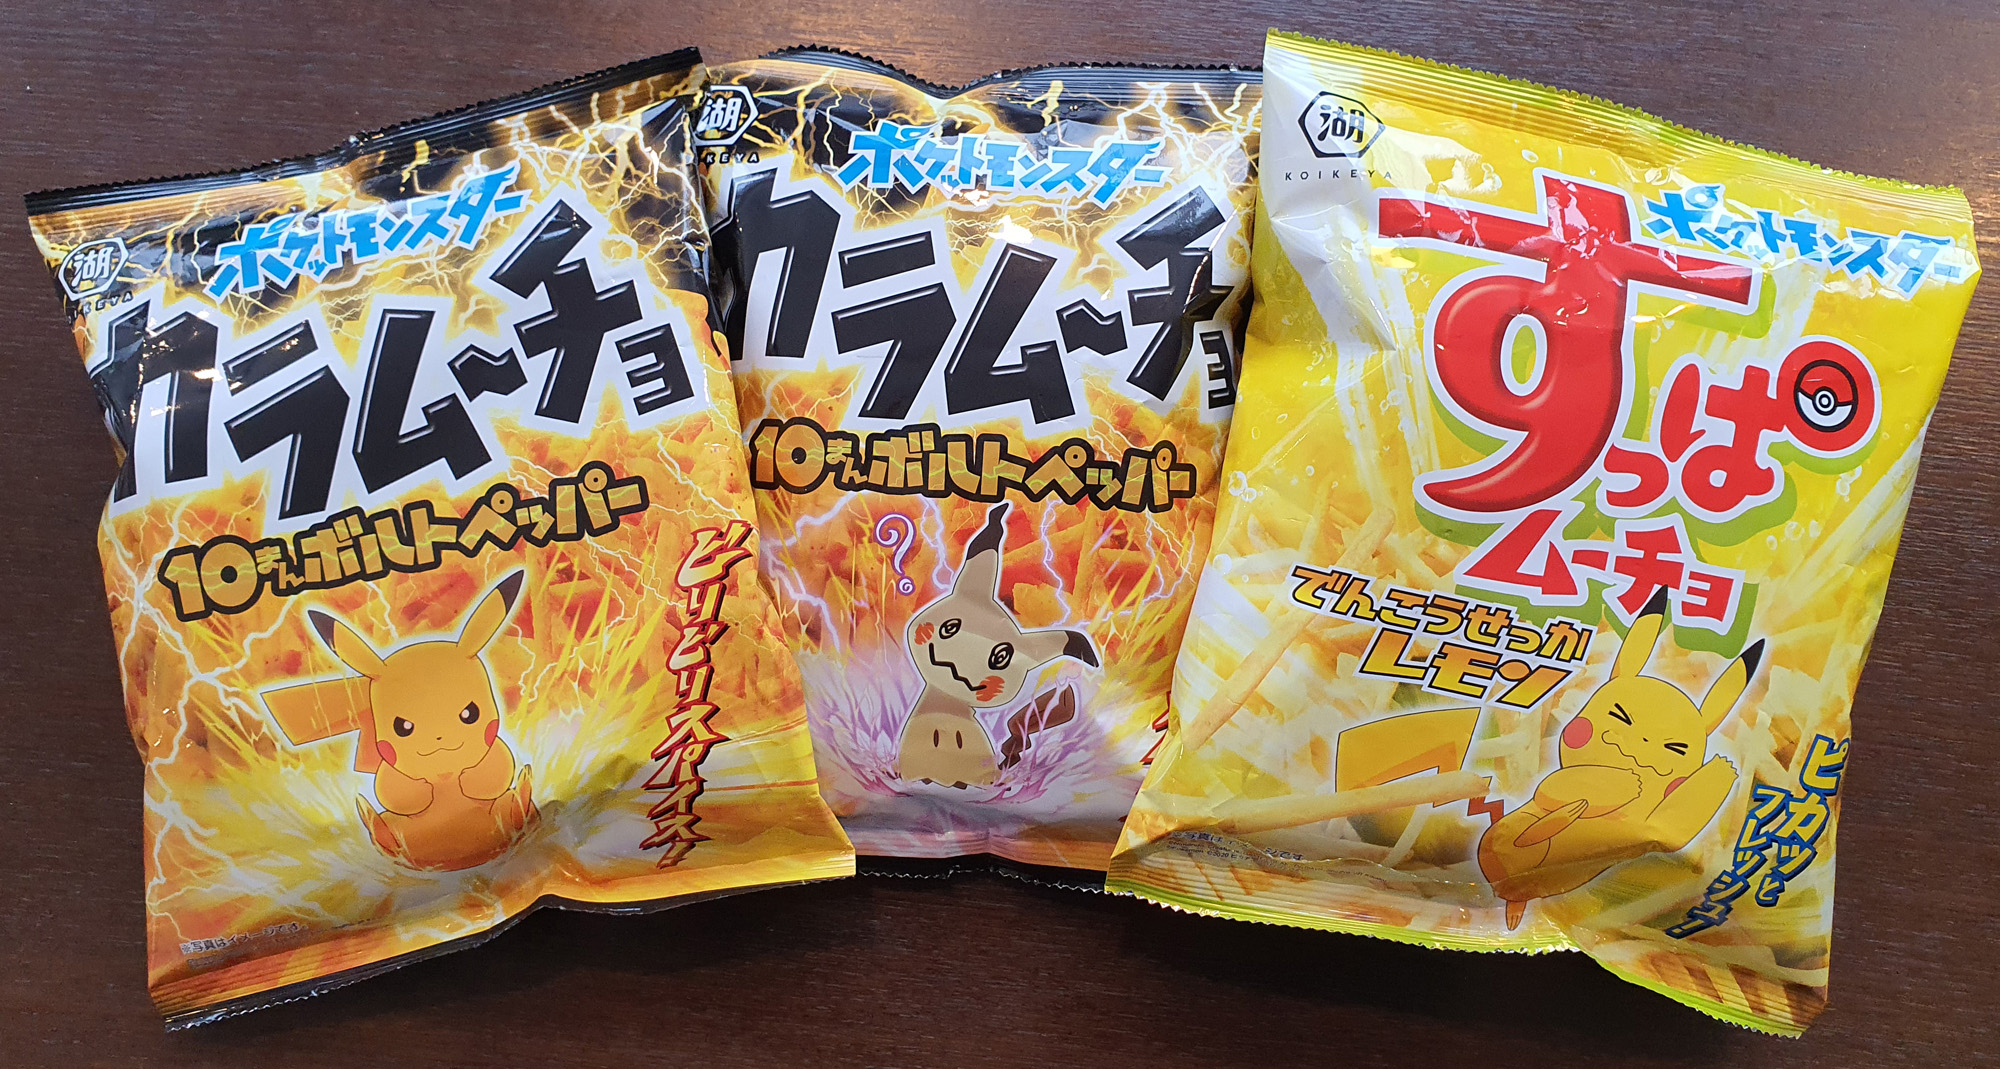 Pikachu Flavor Potato Chips In Japan Swaps4